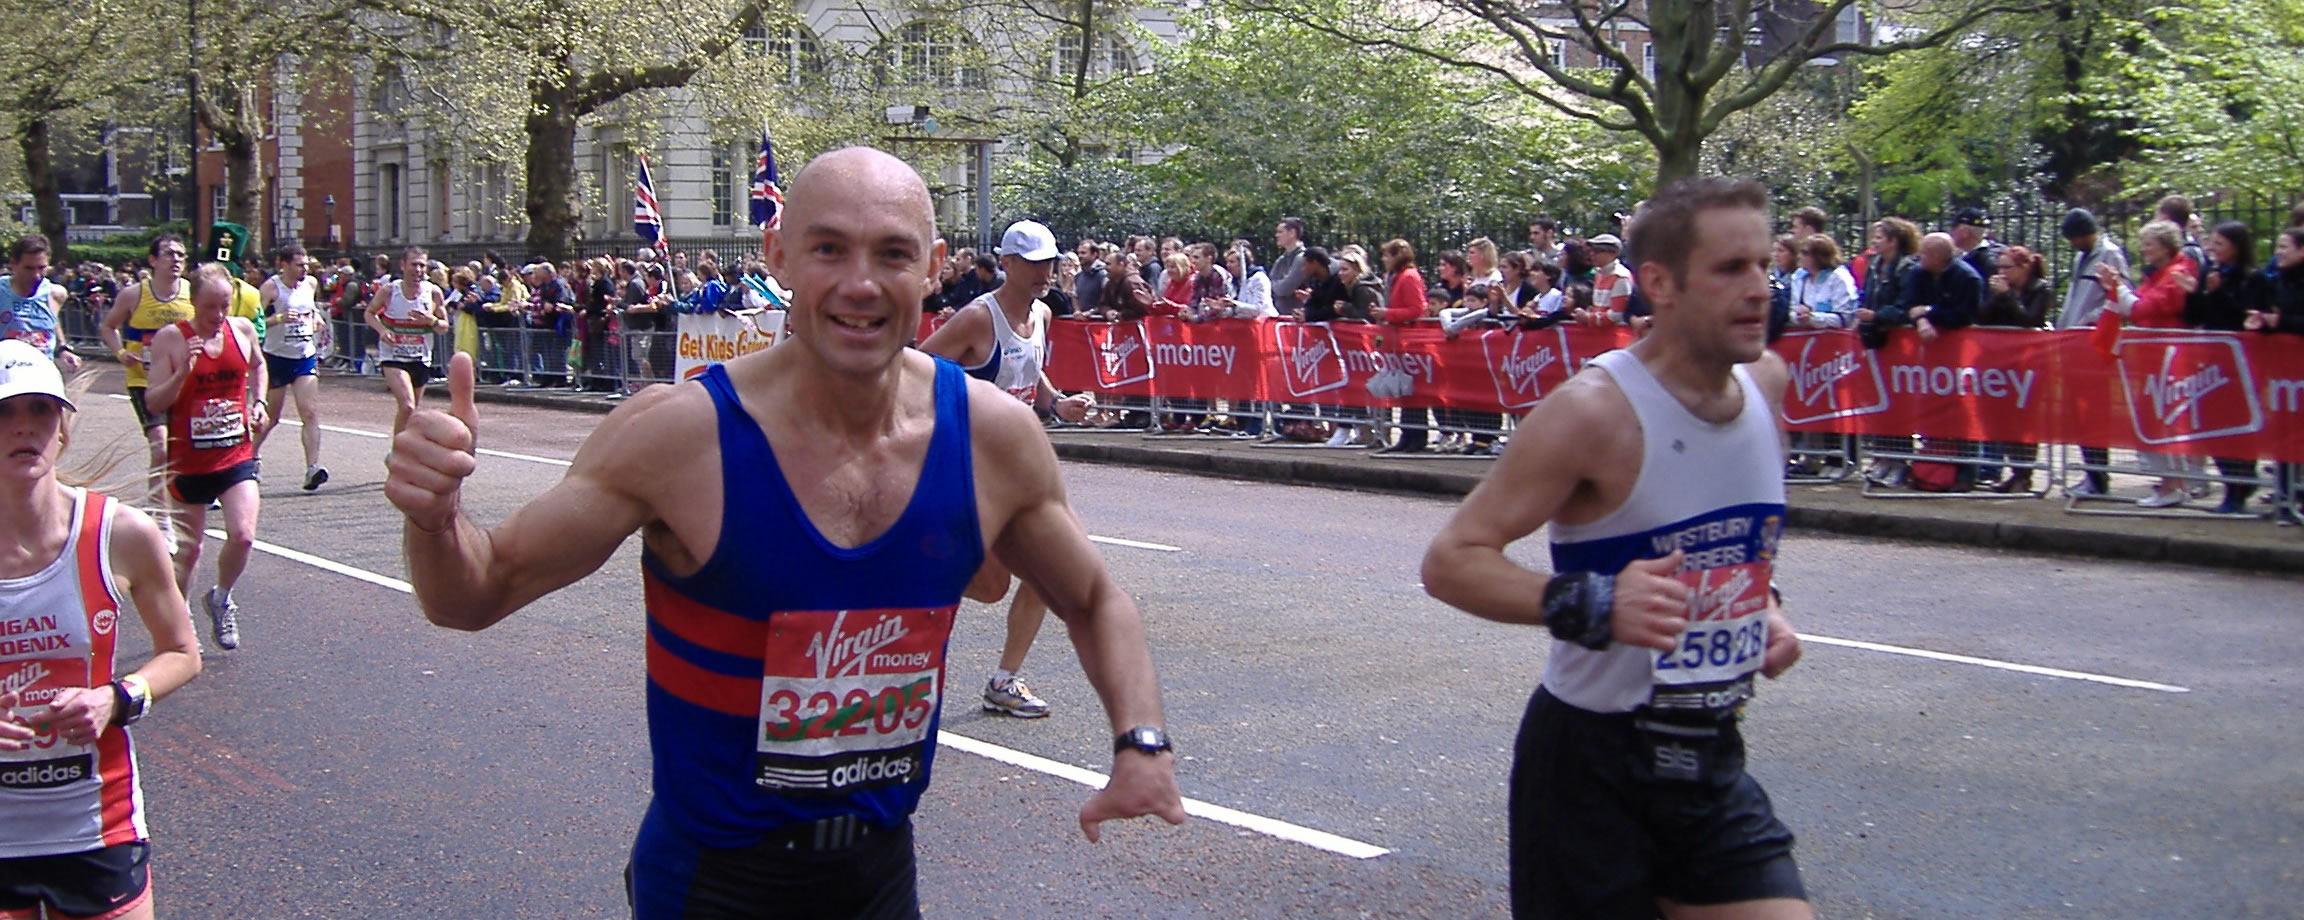 Steve Edwards - London Marathon 2010